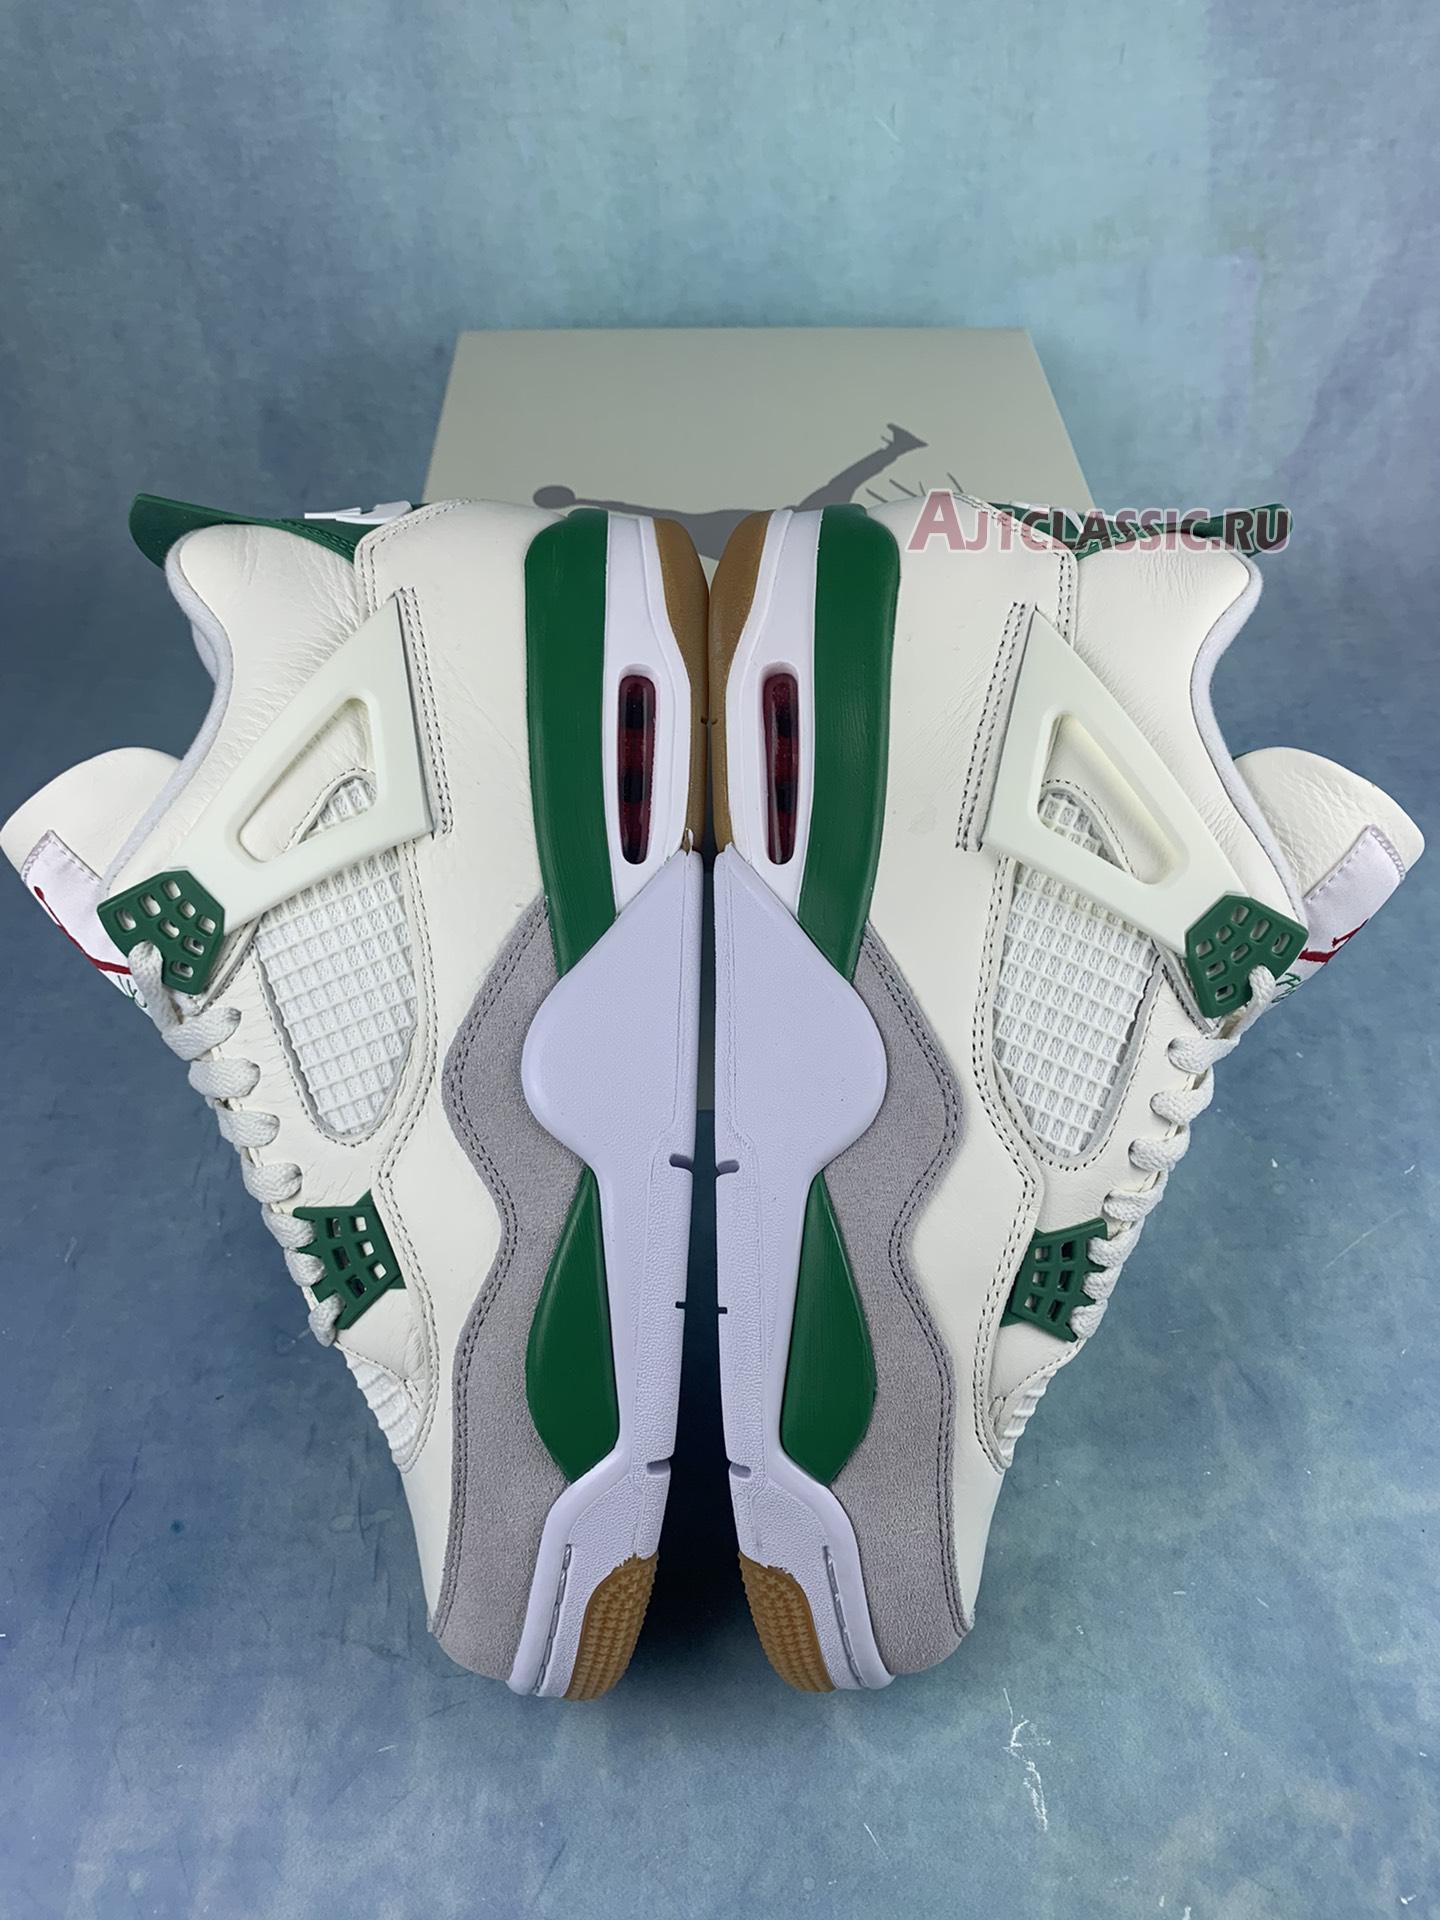 Nike SB x Air Jordan 4 Retro SP "Pine Green" DR5415-103